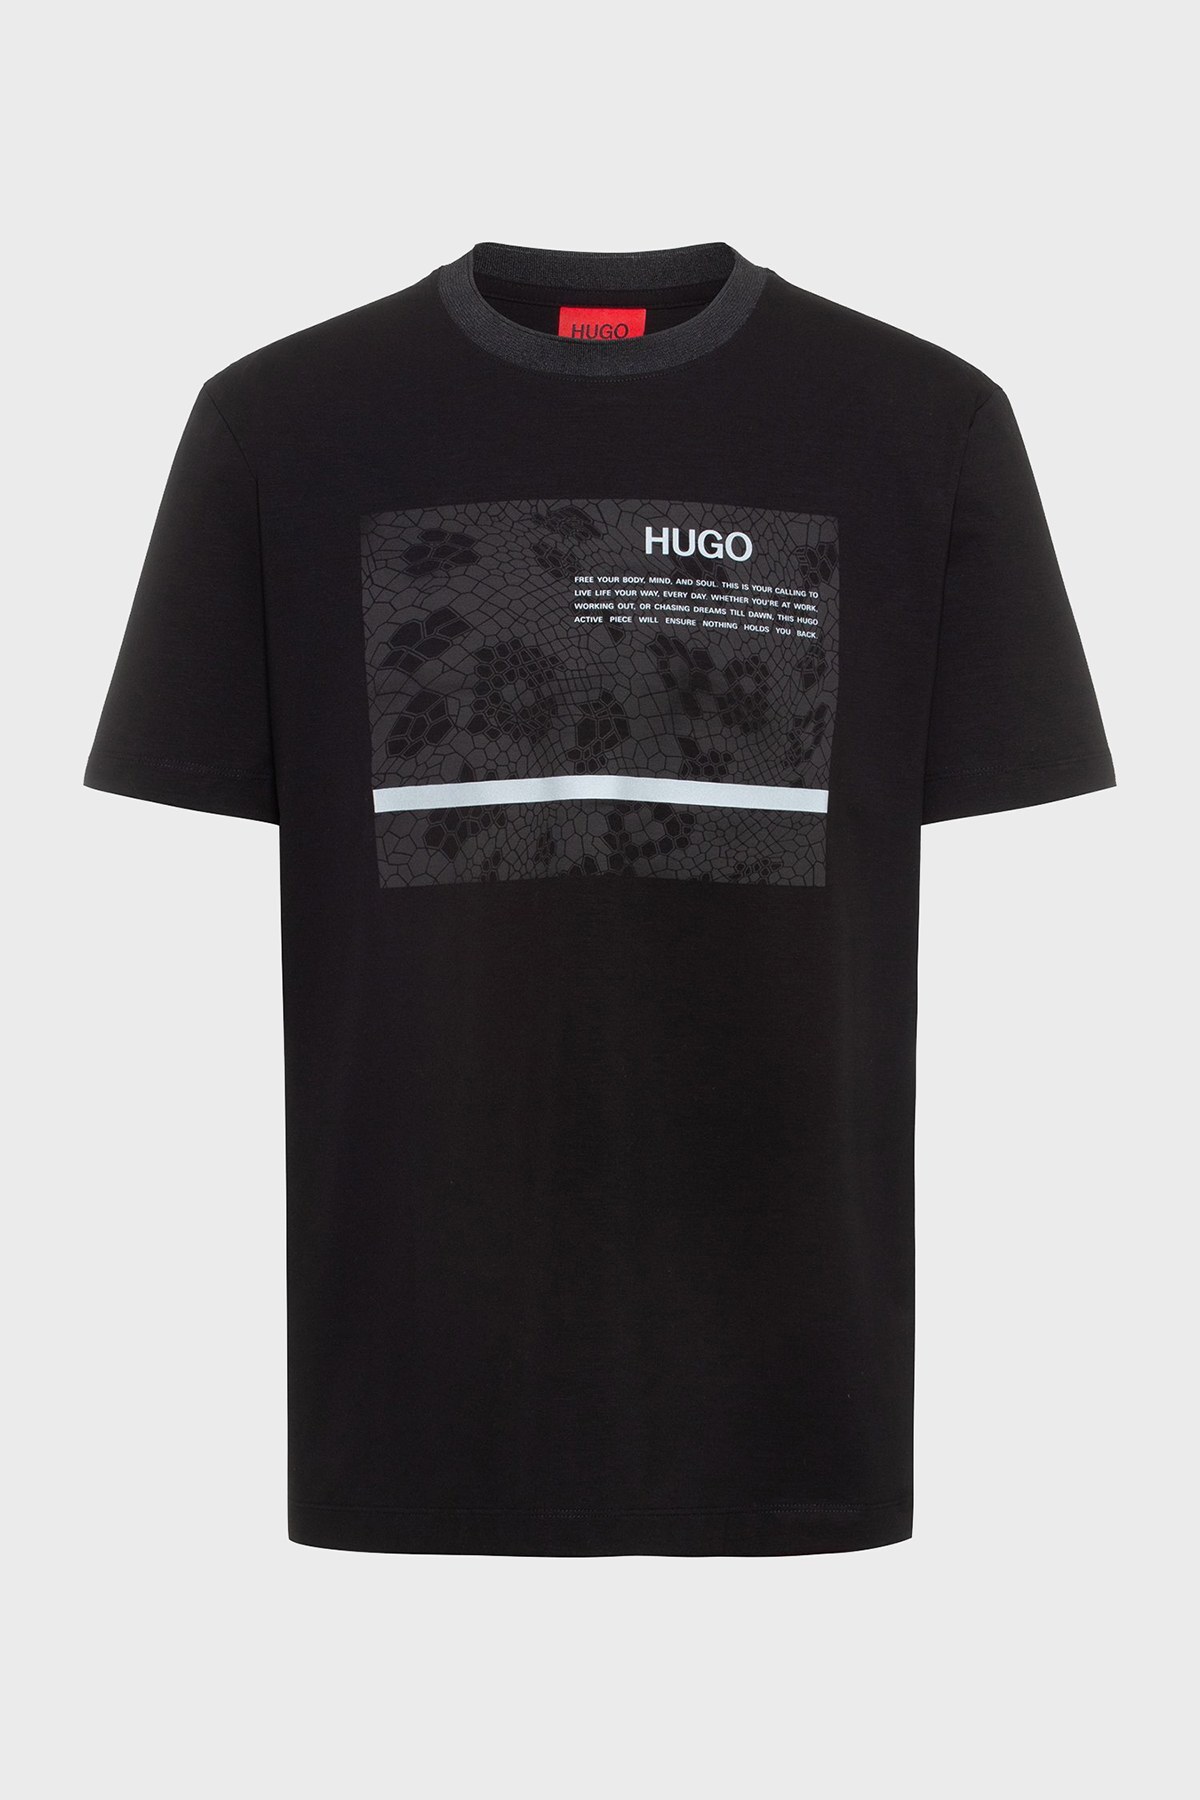 Hugo Boss Regular Fit Baskılı Bisiklet Yaka Pamuklu Erkek T Shirt 50457132 001 SİYAH